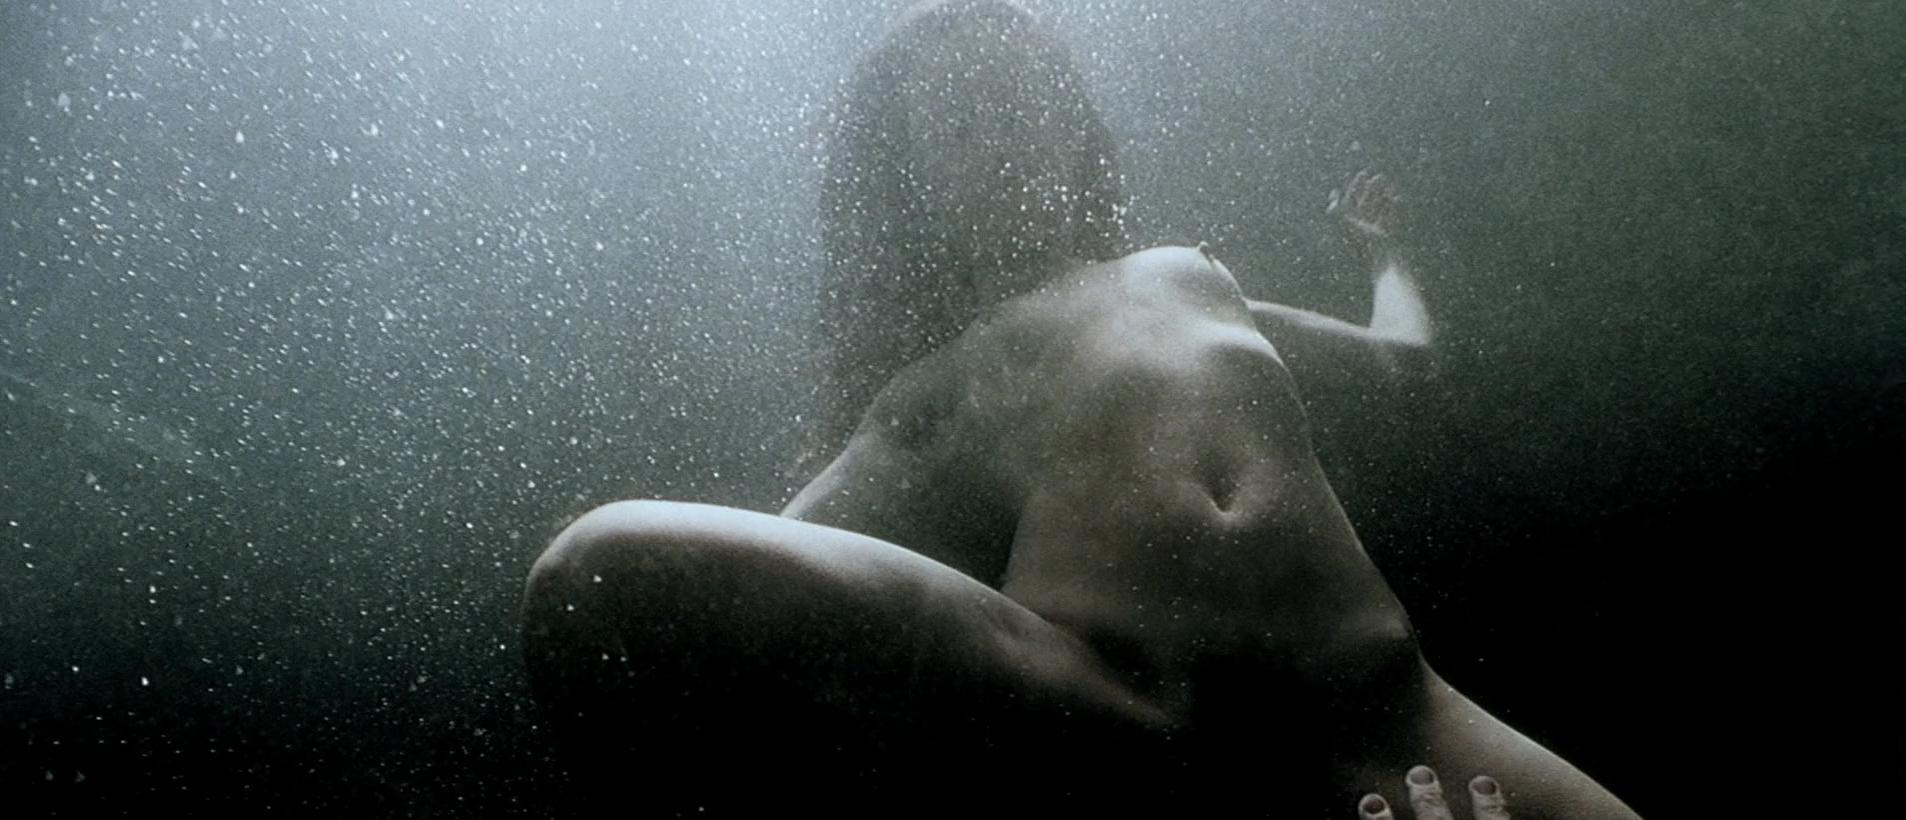 Nude Video Celebs Juliette Lewis Nude Blueberry 2004